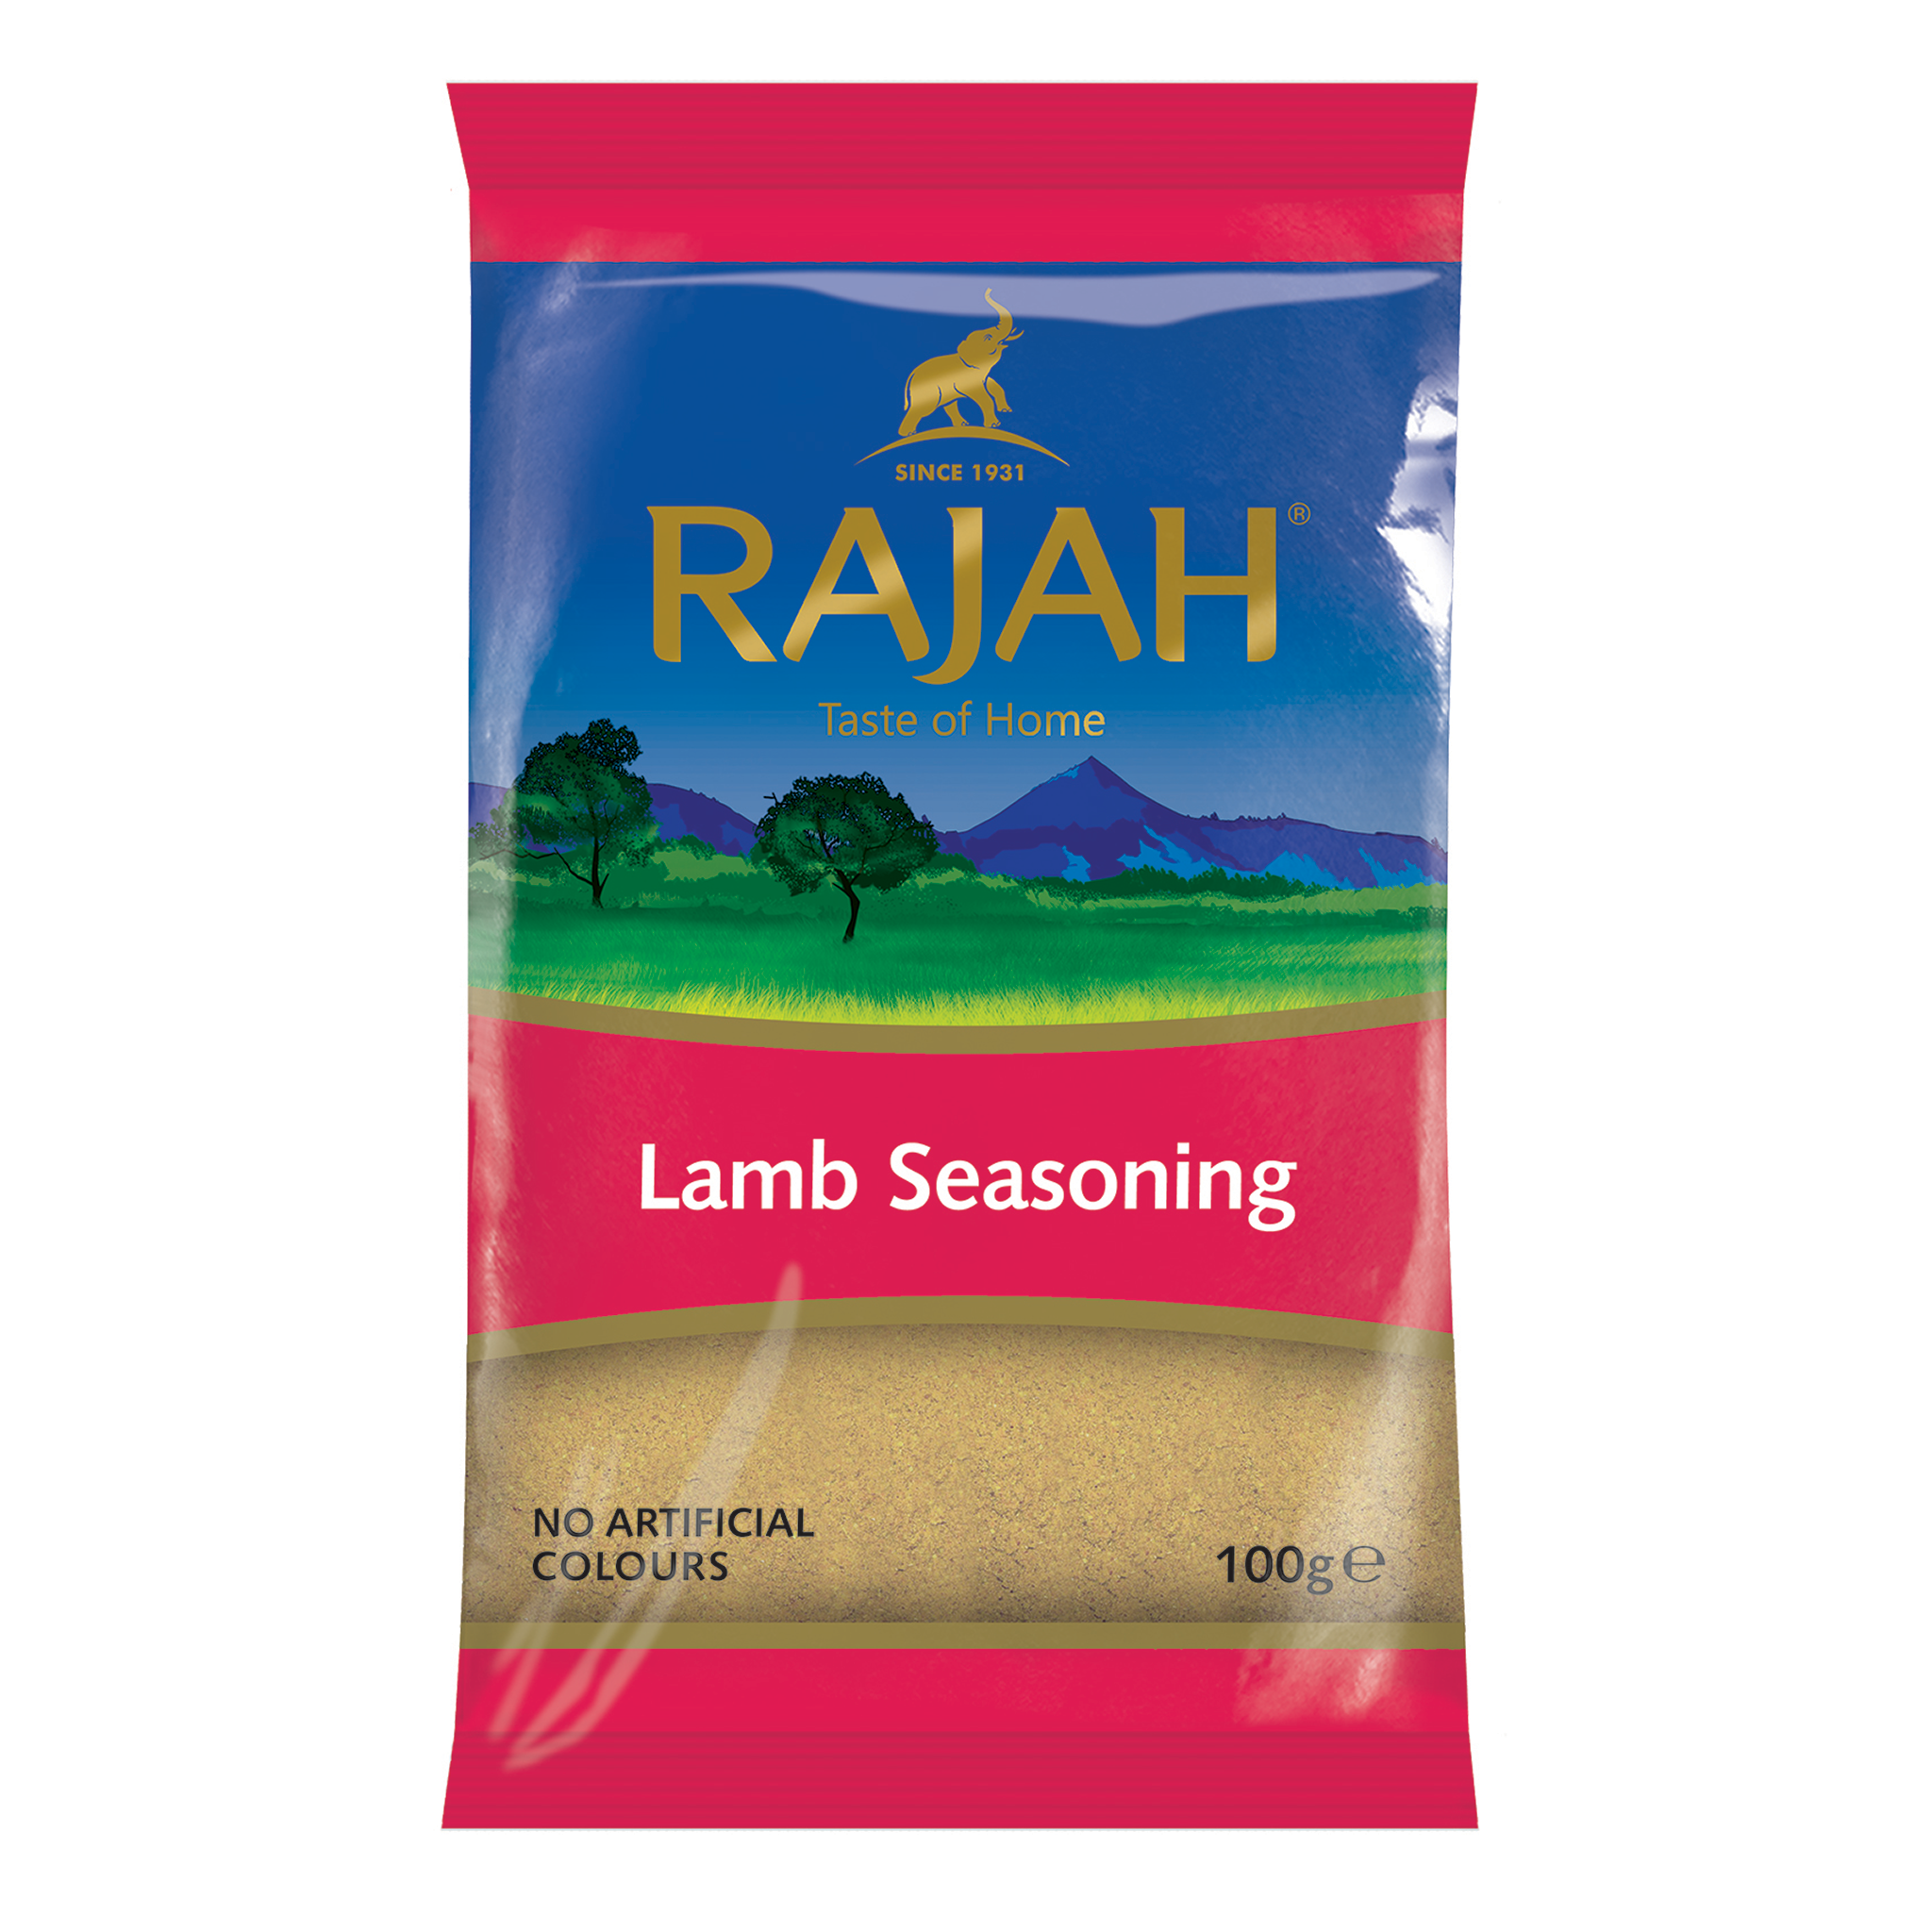 Lamb Seasoning Spice Mix 100g by Rajah